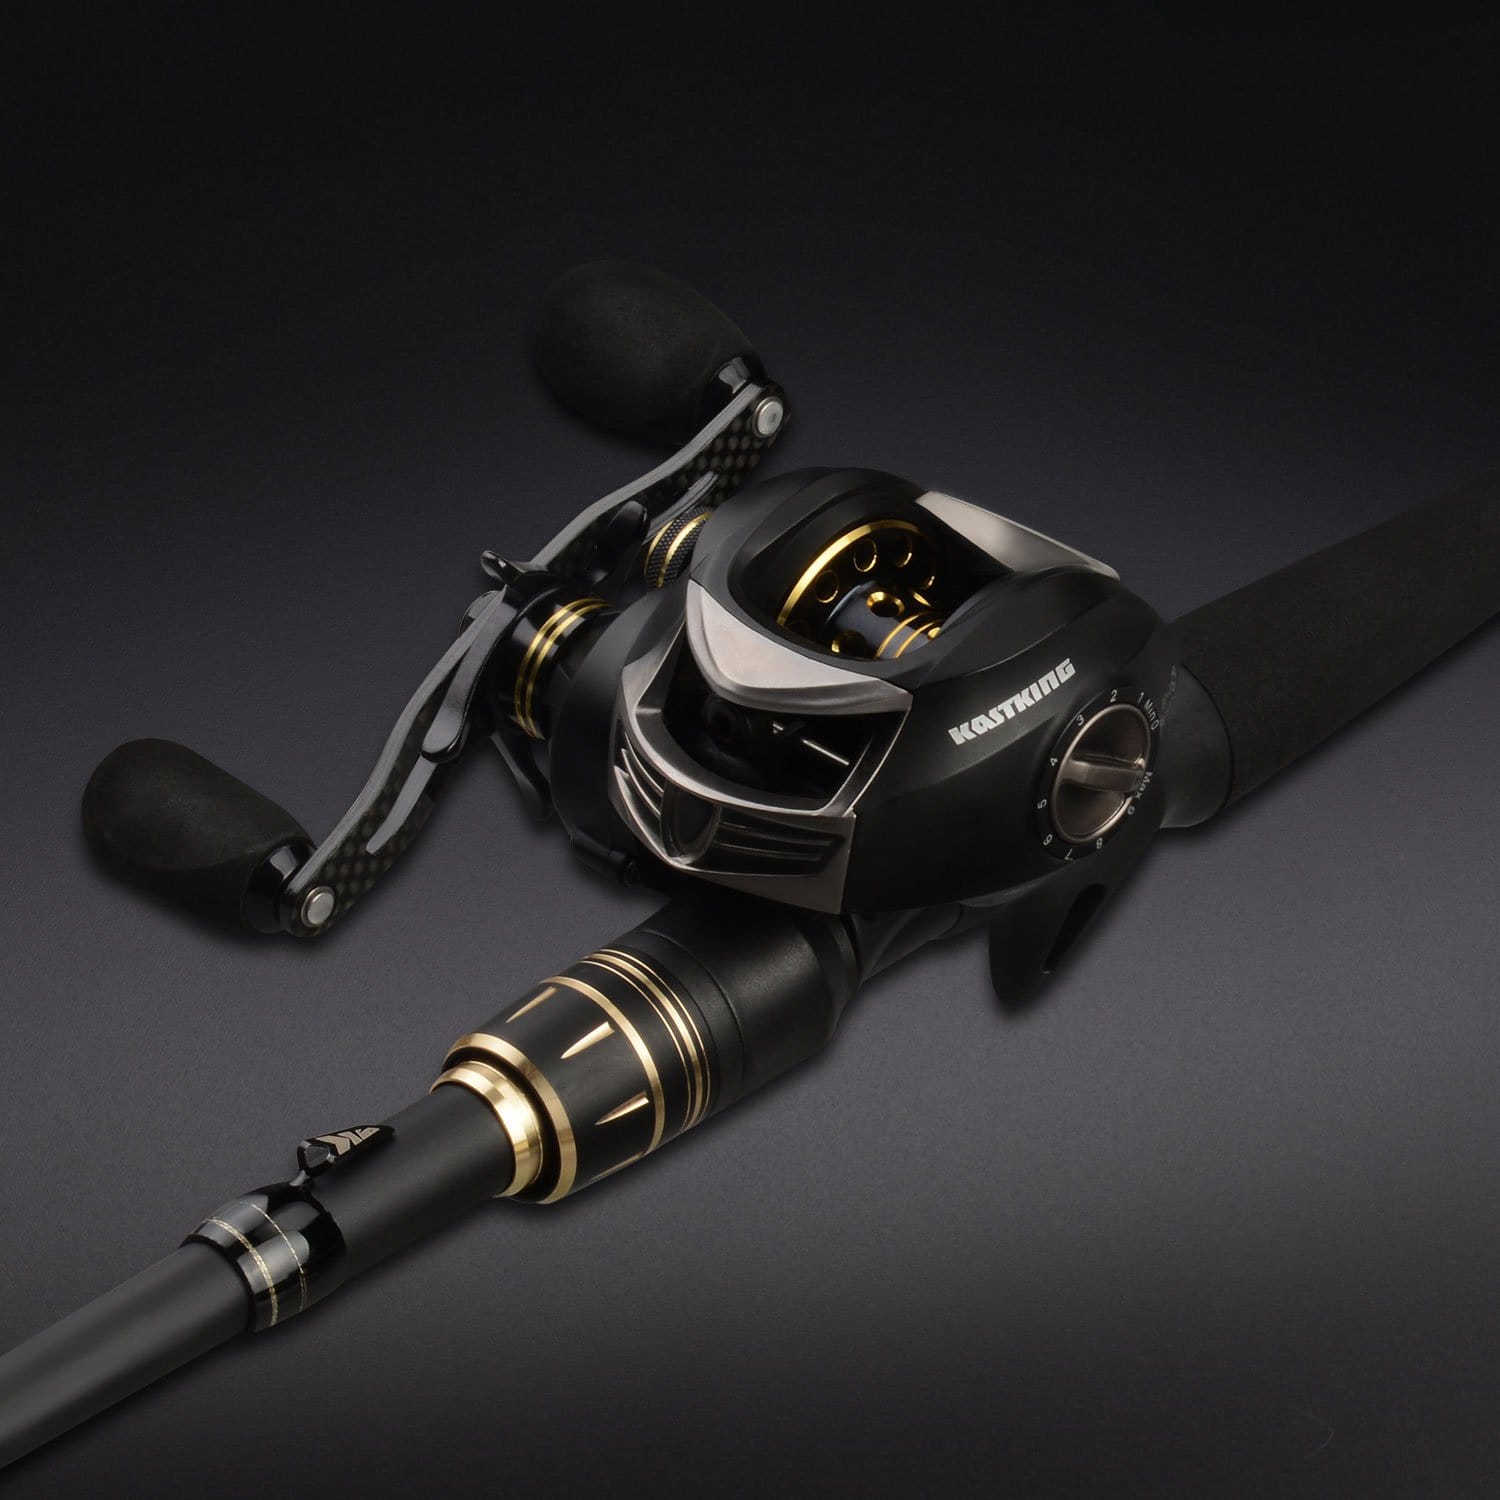 TRAVEL FISHING ROD REVIEW KastKing Compass Telescopic Fishing Rod